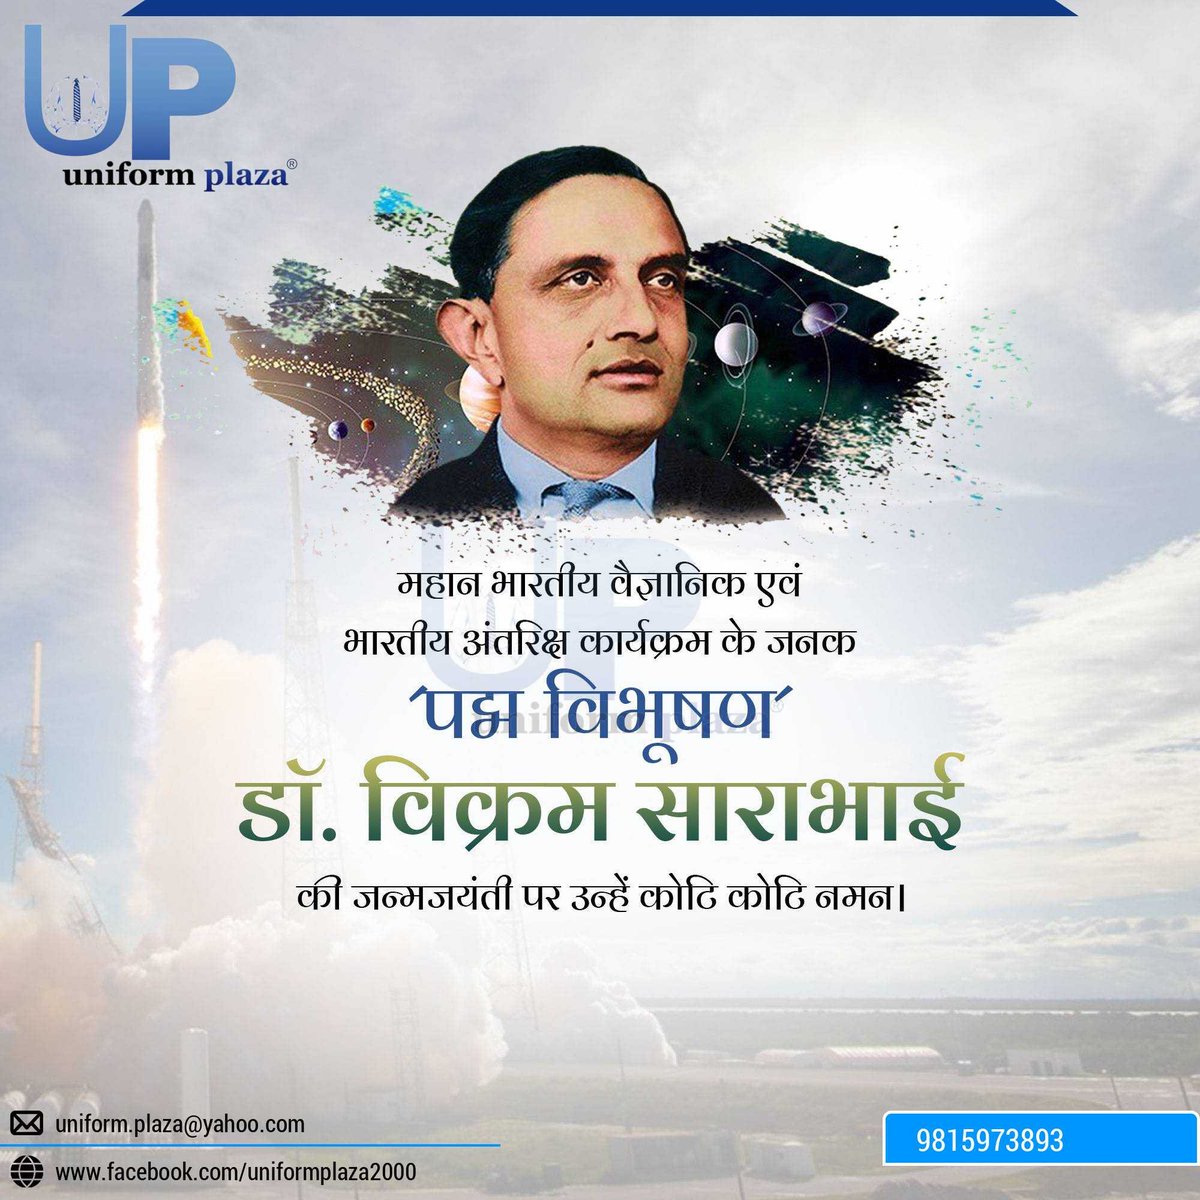 Humble Tribute from Uniform Plaza
                    #SpaceExploration #INSAT #India #Educator #SpaceScientist #ScienceLegacy #proudmoment #ISRO #VikramSarabhaiJayanti #Physicist #Inspiration #VikramSarabhai #uniform #UniformPlaza